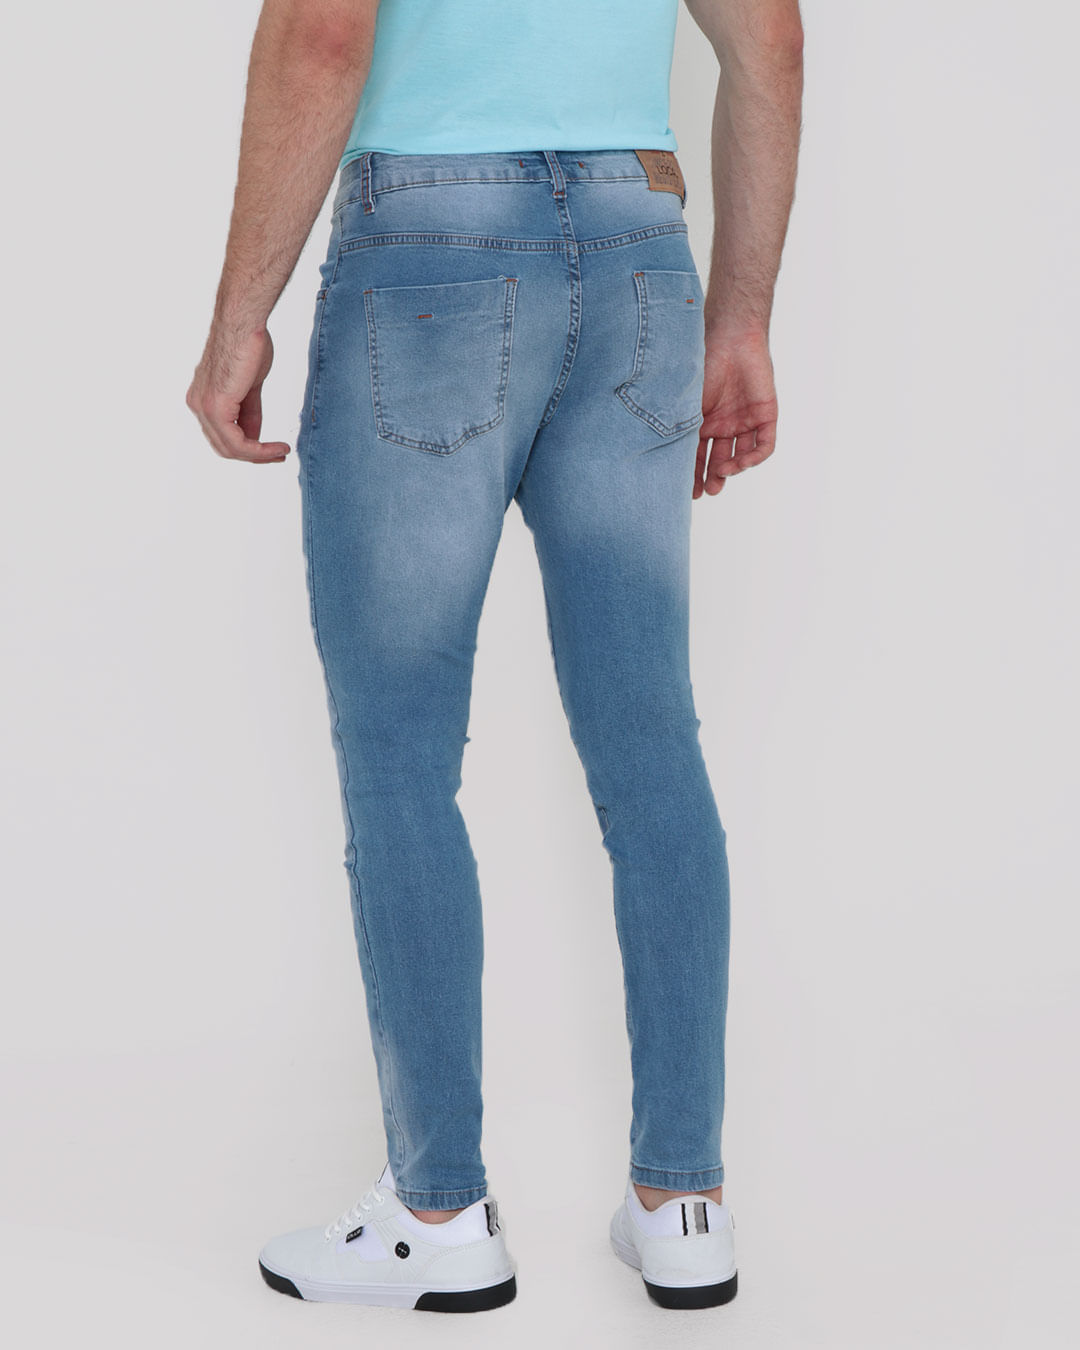 23121000947045-blue-jeans-medio-3